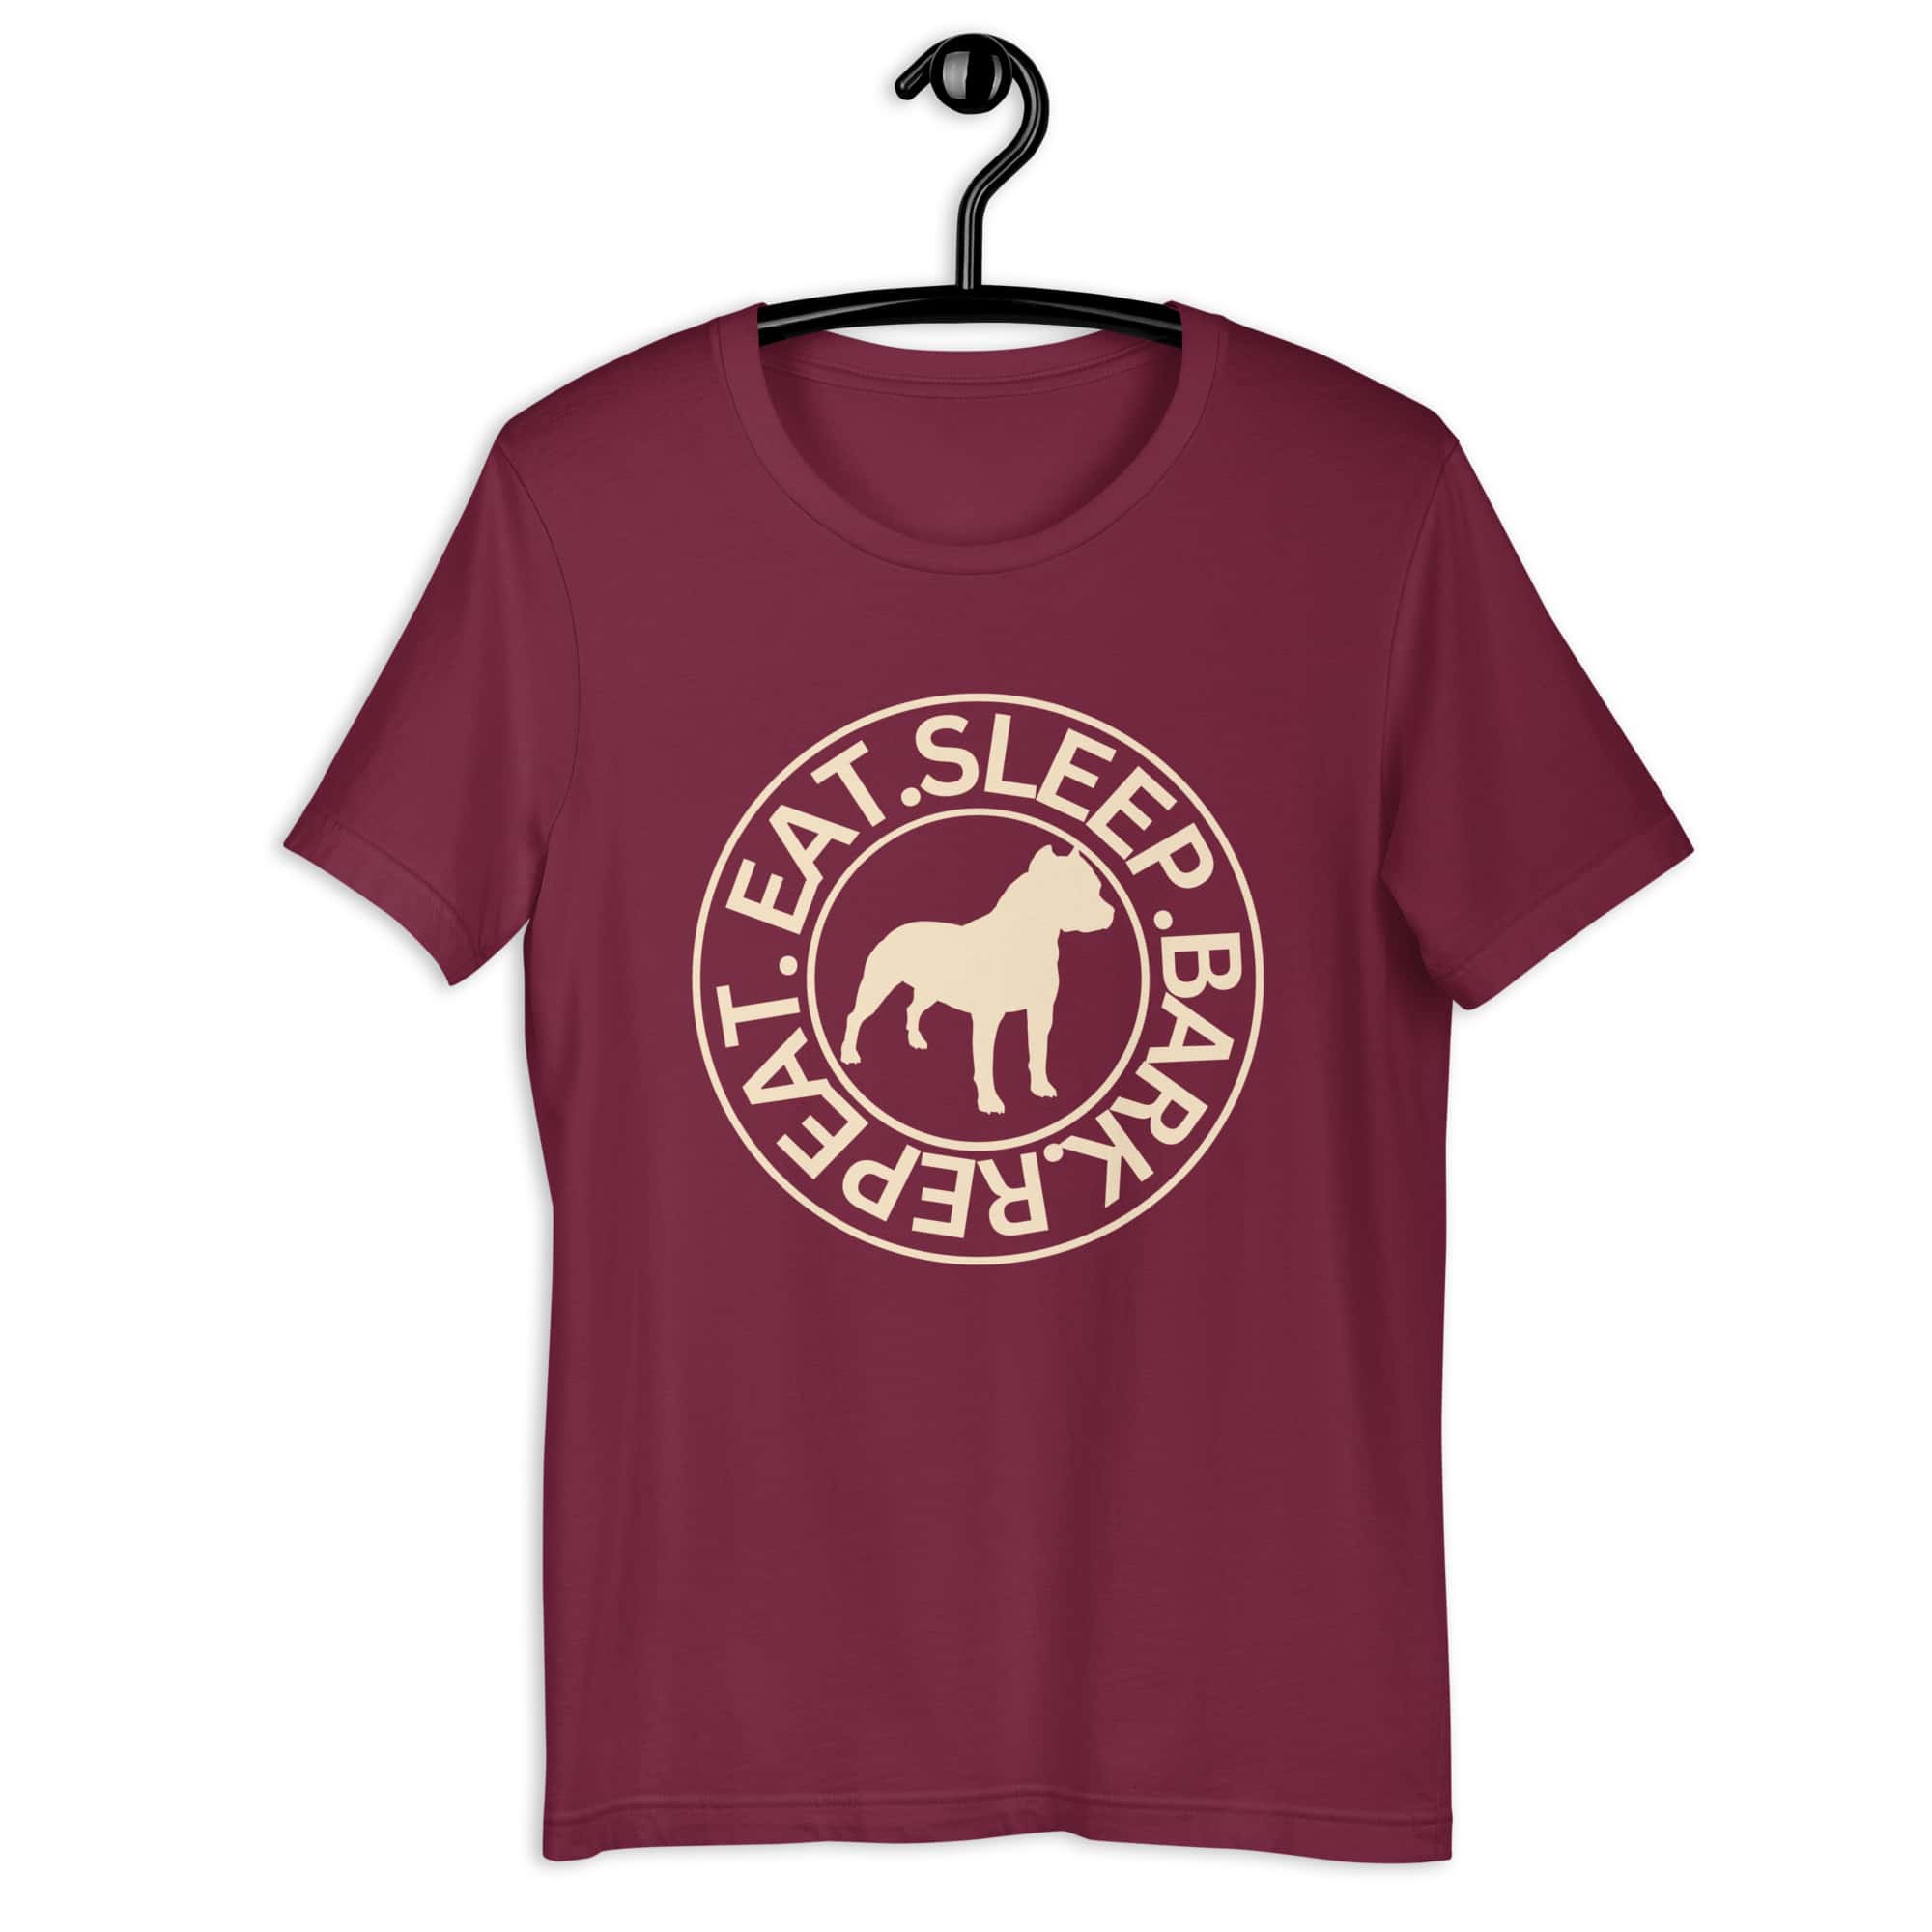 Eat Sleep Bark Repeat Toy Bulldog Unisex T-Shirt. Maroon